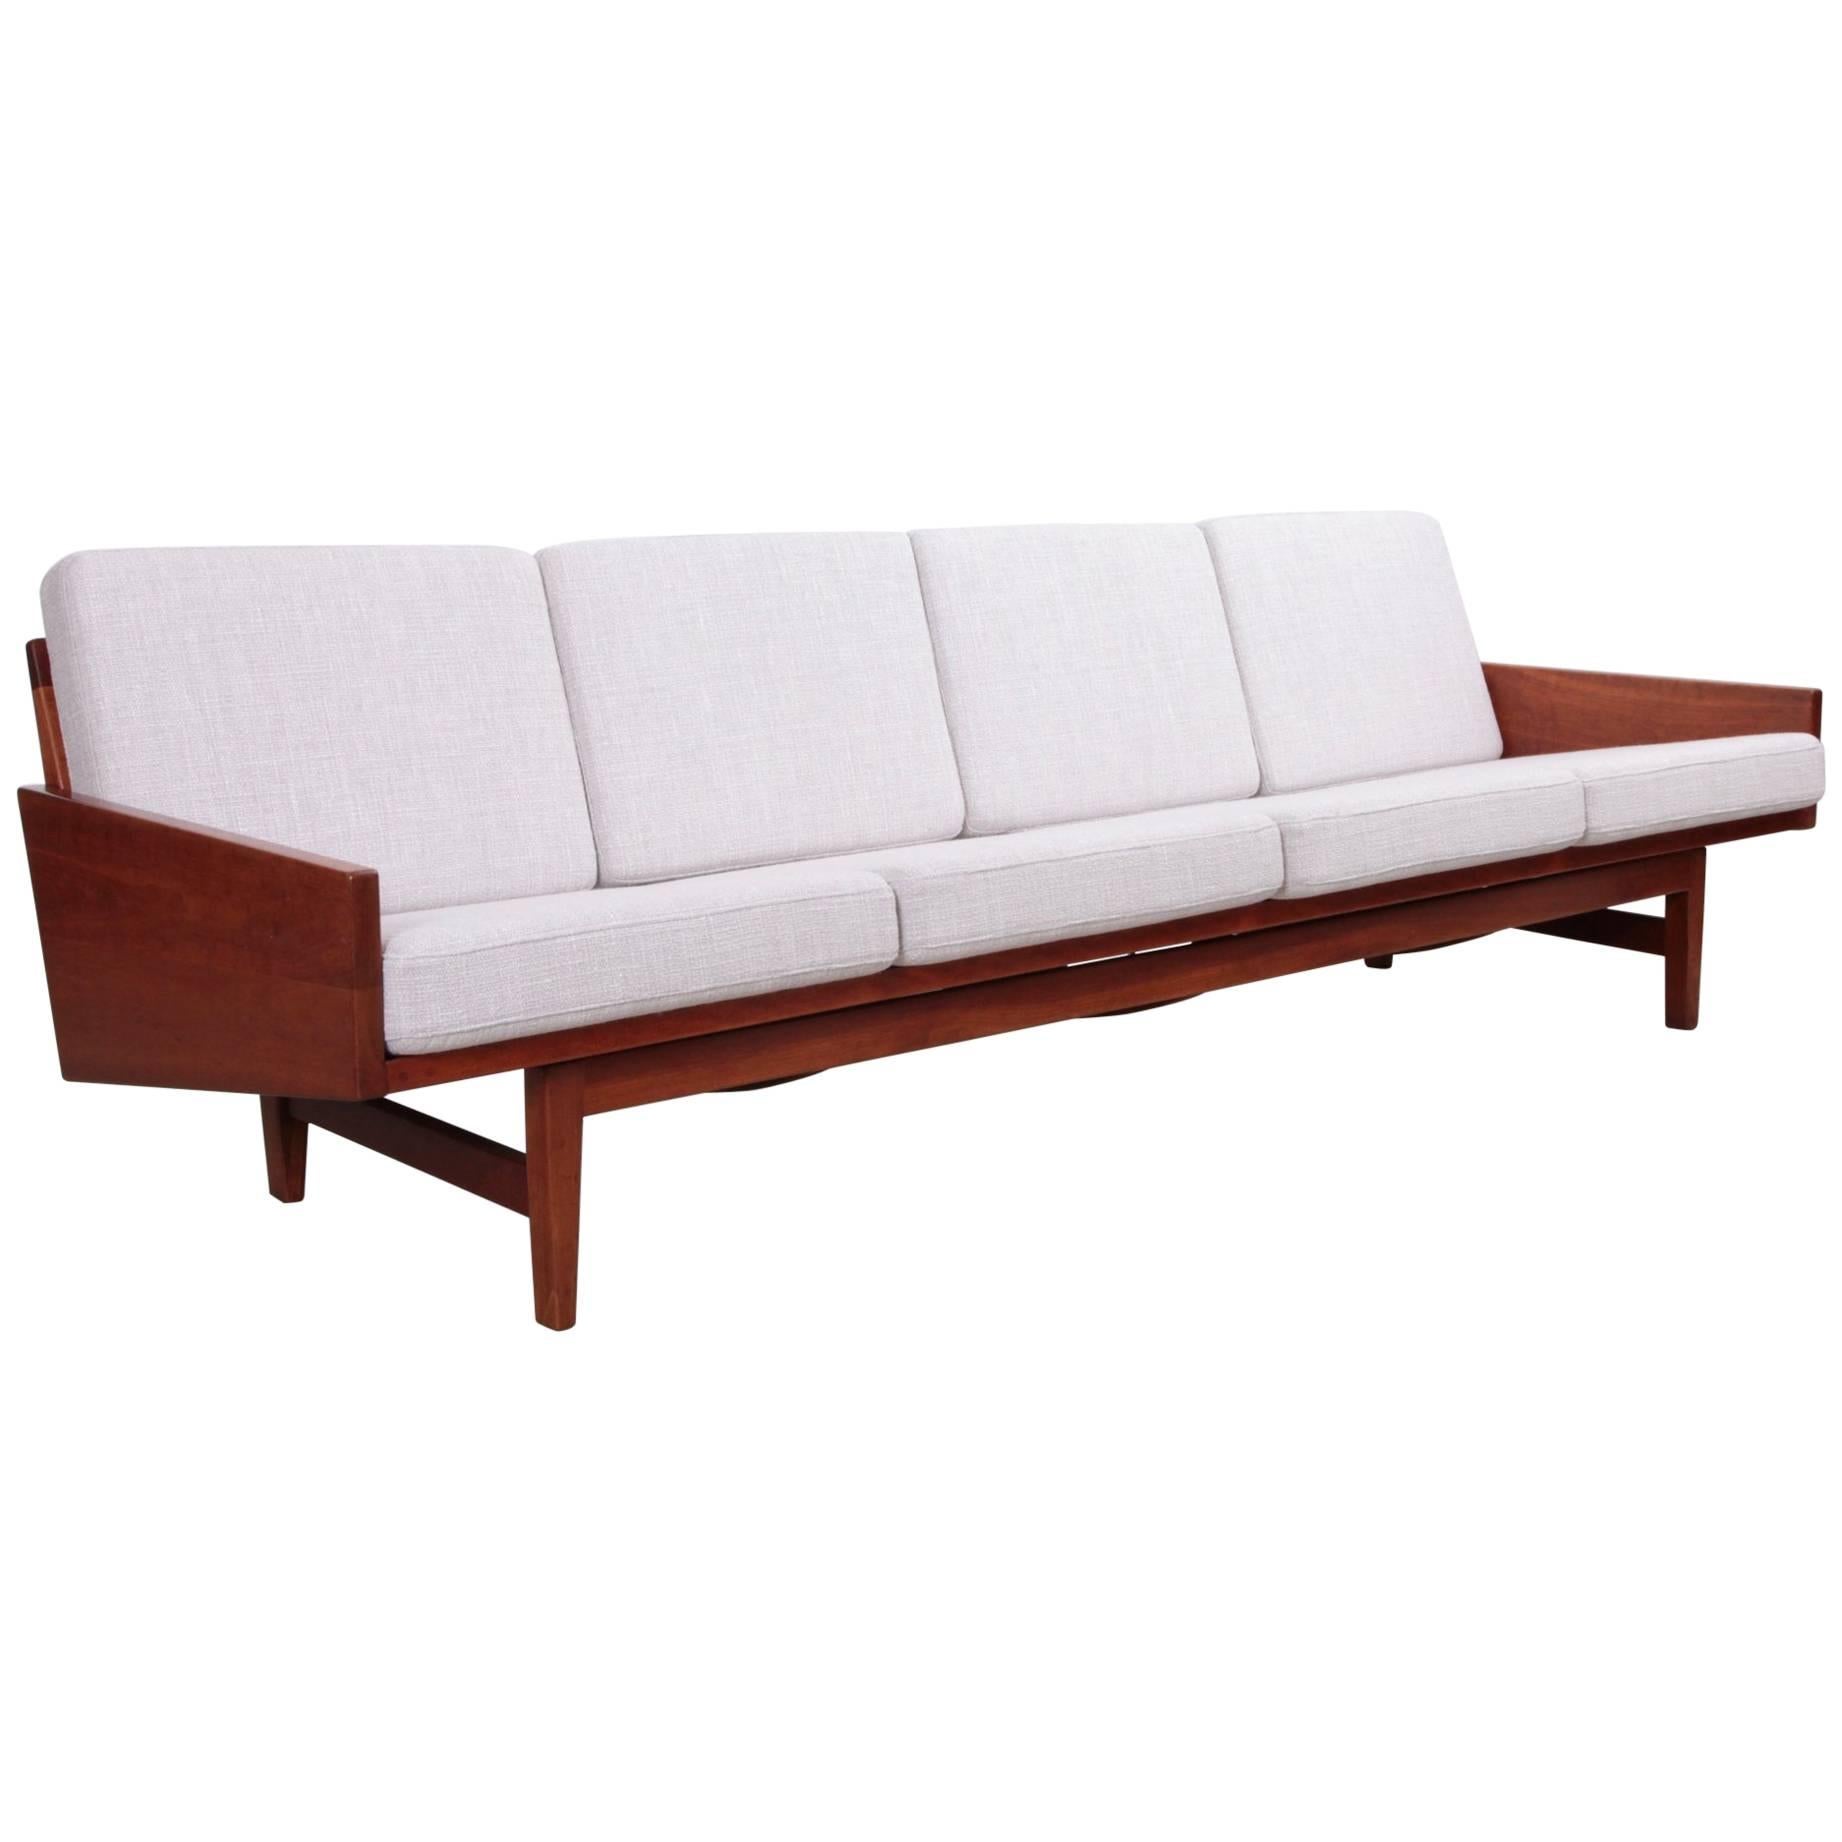 Rare Solid Walnut Arden Riddle Four-Seat Sofa, USA, 1967